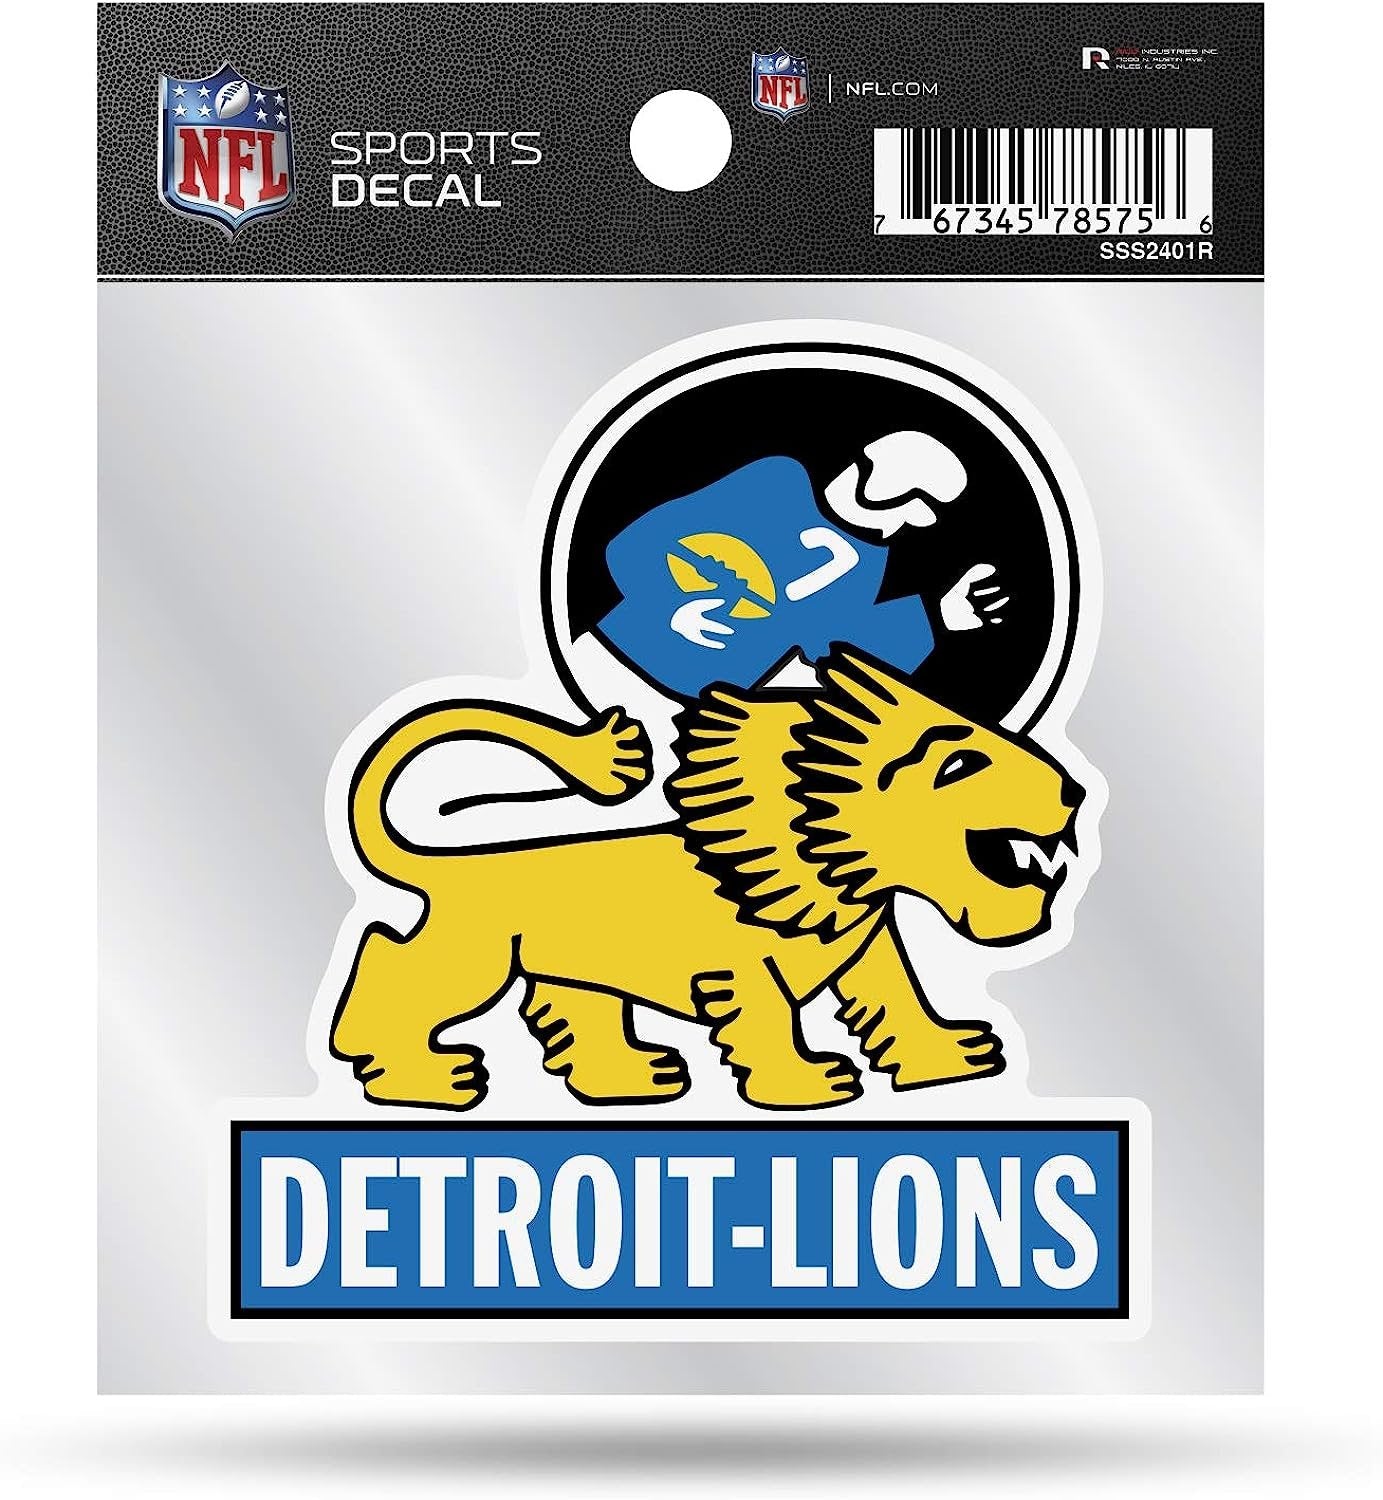 Detroit Lions 4x4 Inch Die Cut Decal Sticker, Retro Logo, Clear Backing